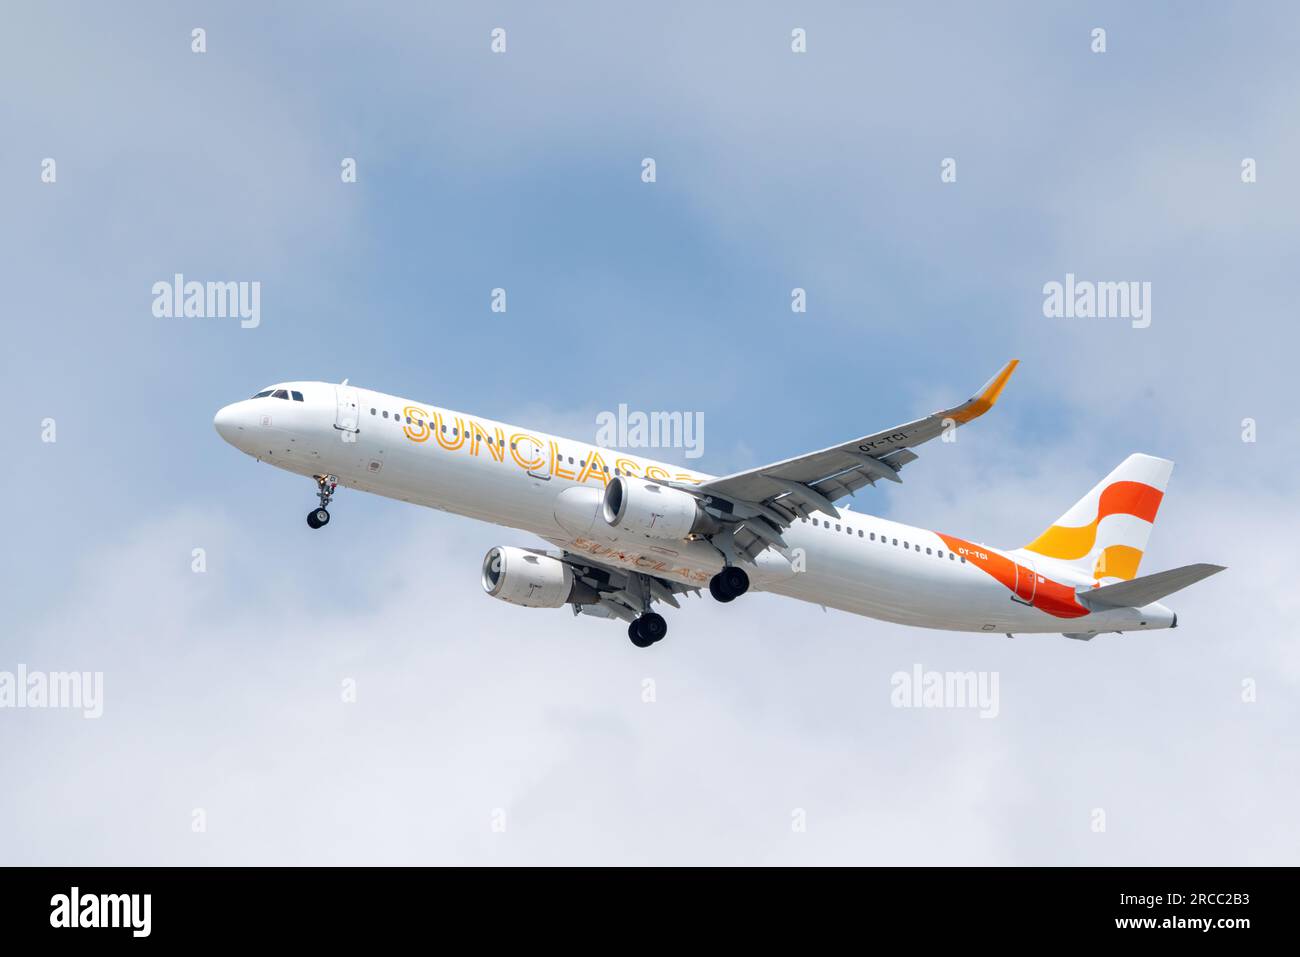 Antalya Turkey 04.22.2023: Sunclass airlines plane takes off from Antalya terminal. Stock Photo